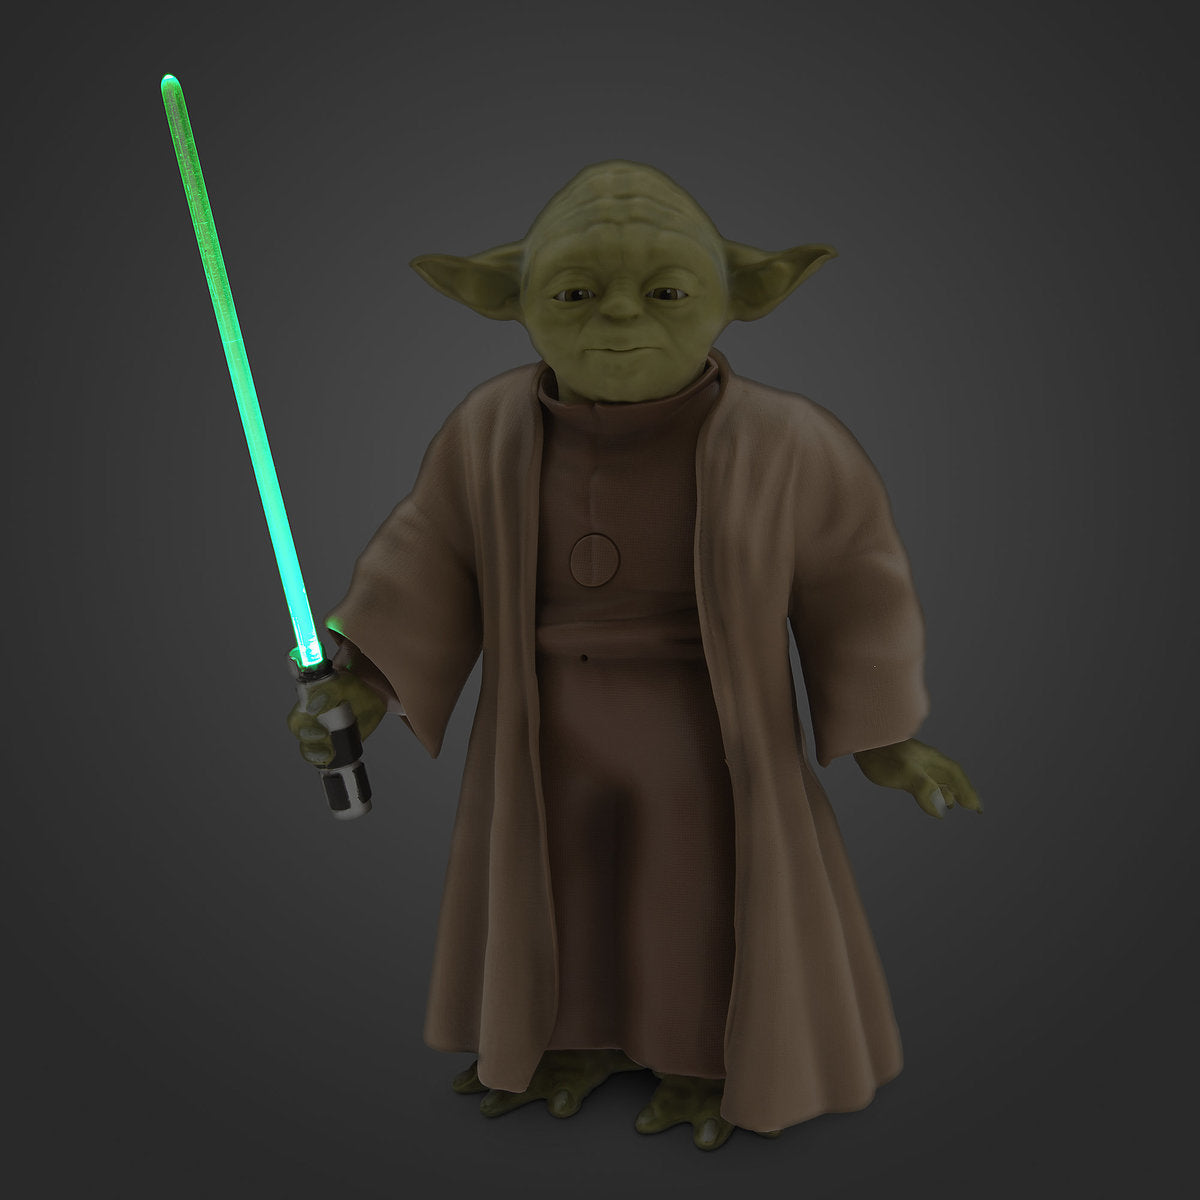 Disney Parks Star Wars Yoda Talking Figure New with Box